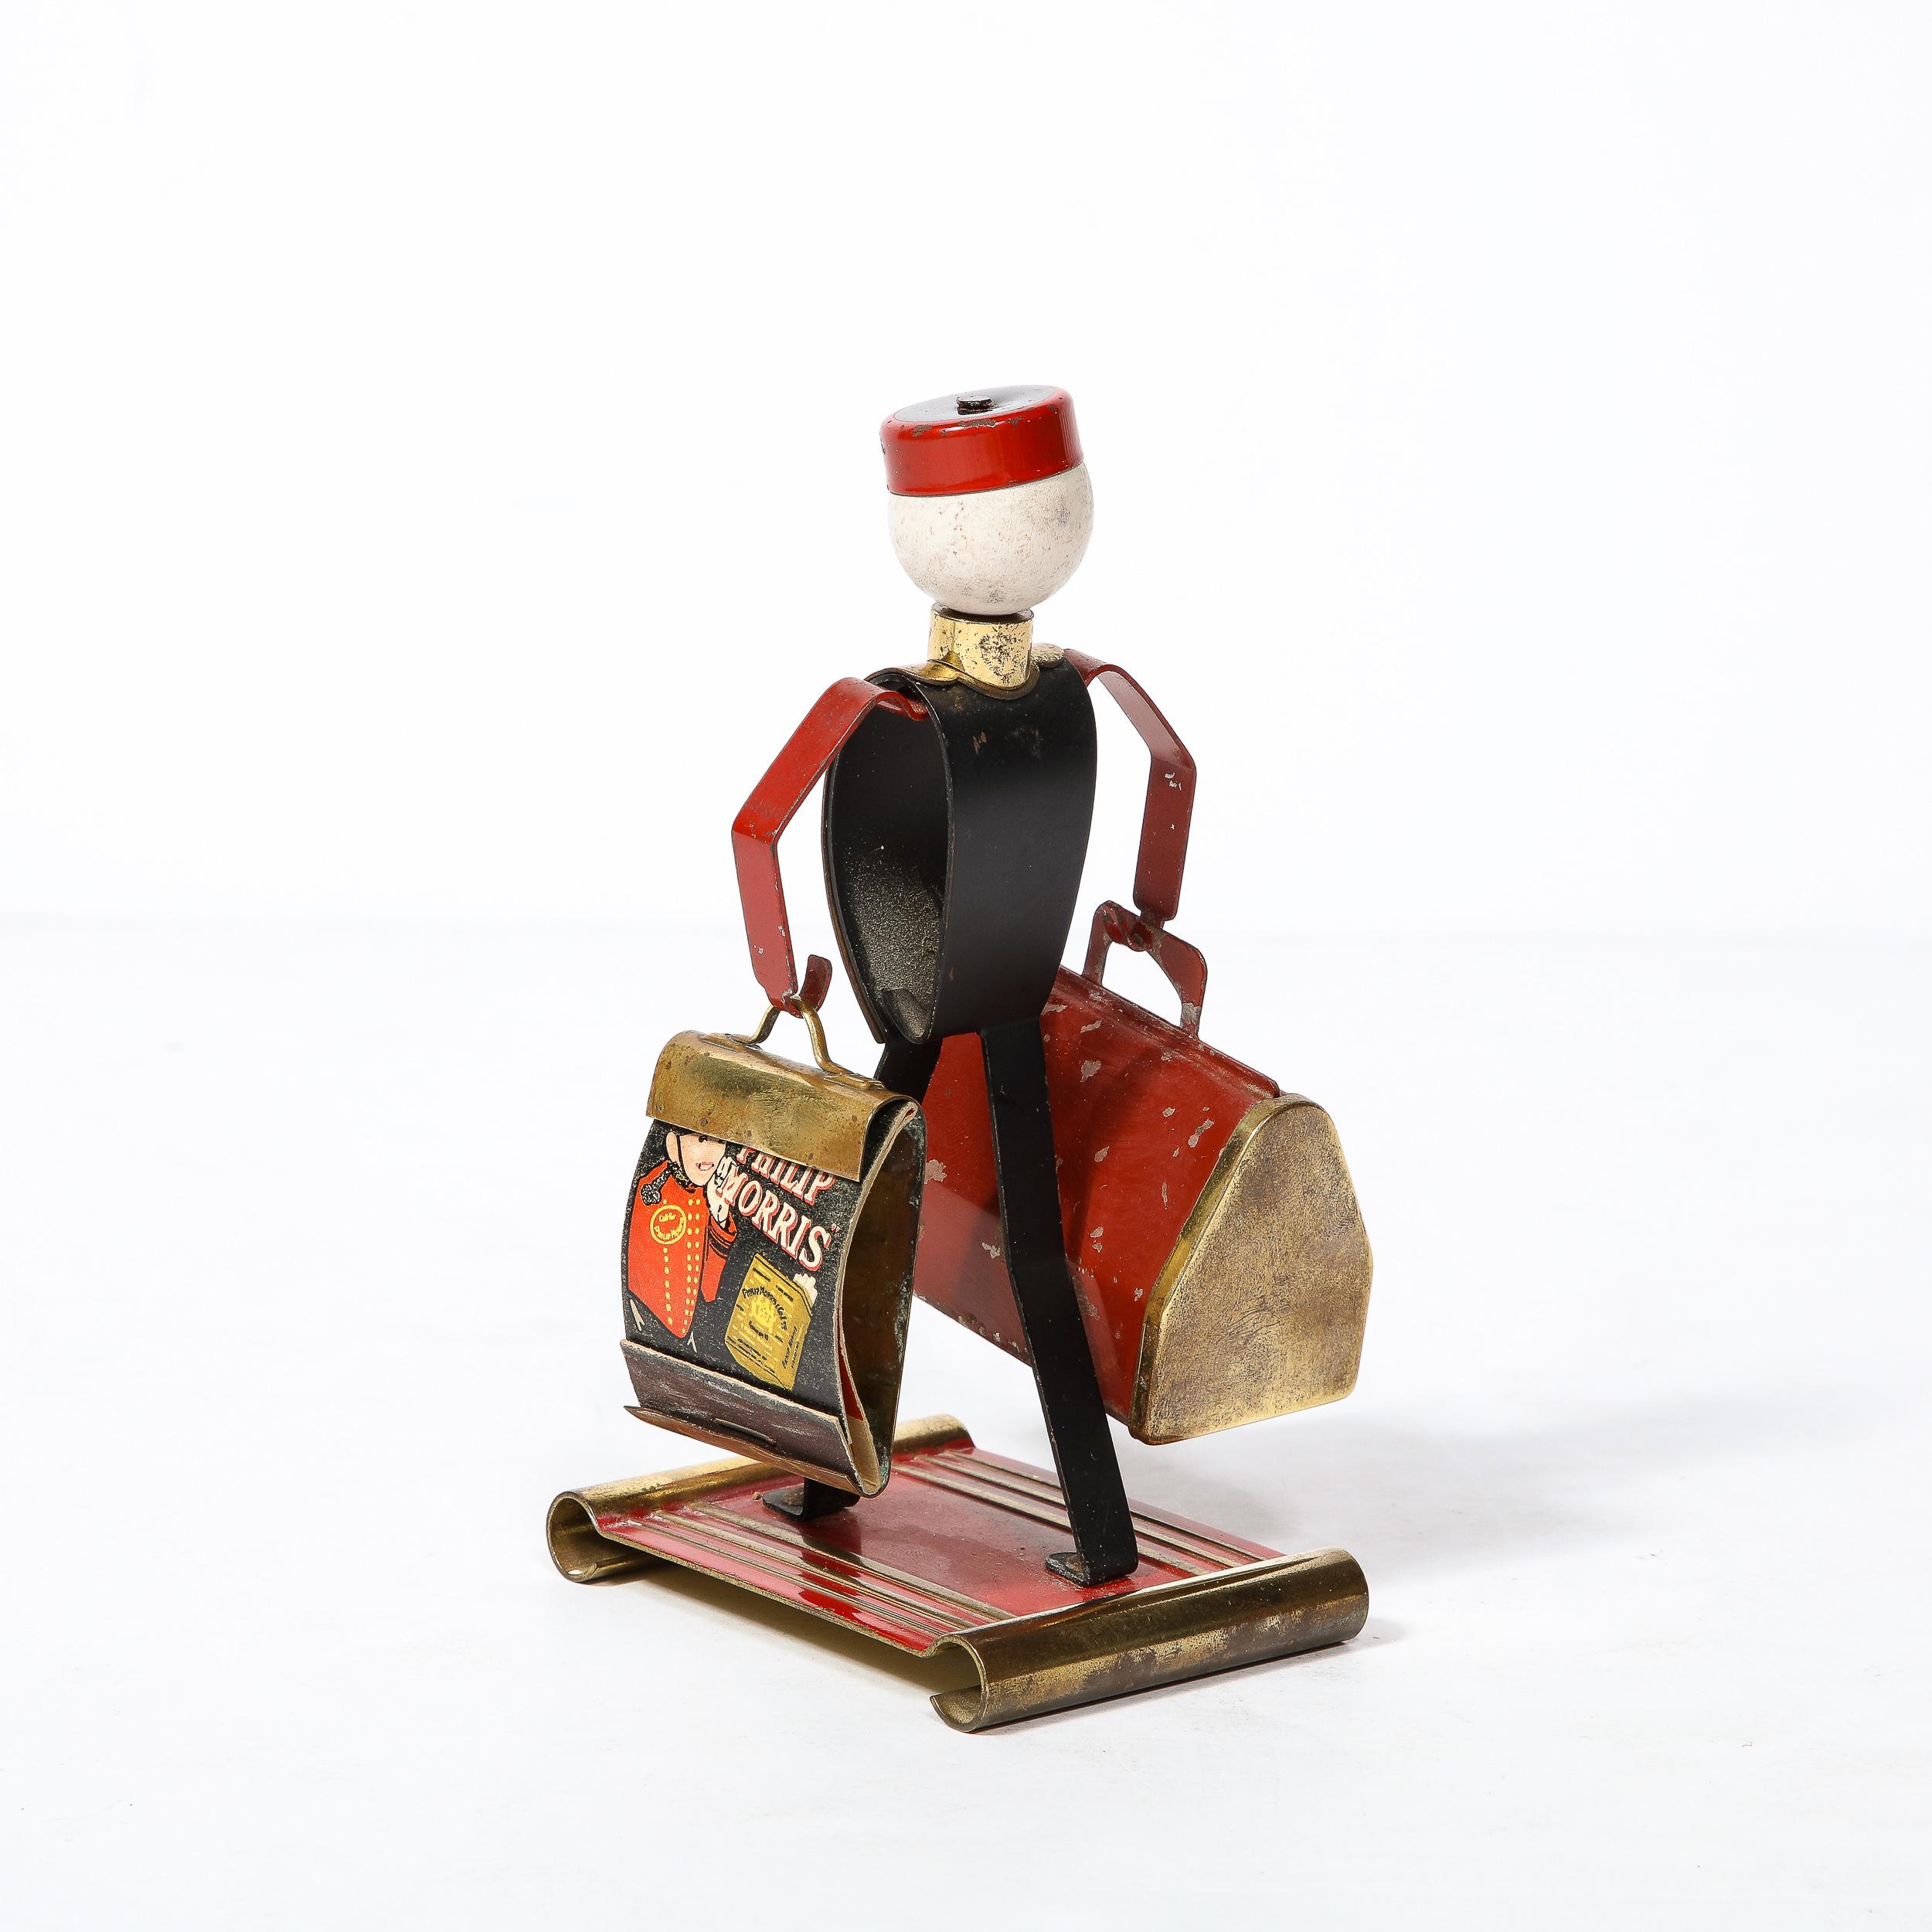 American Art Deco Bellhop Figurine Cigarette Holder in Brass and Enamel by Philip Morris